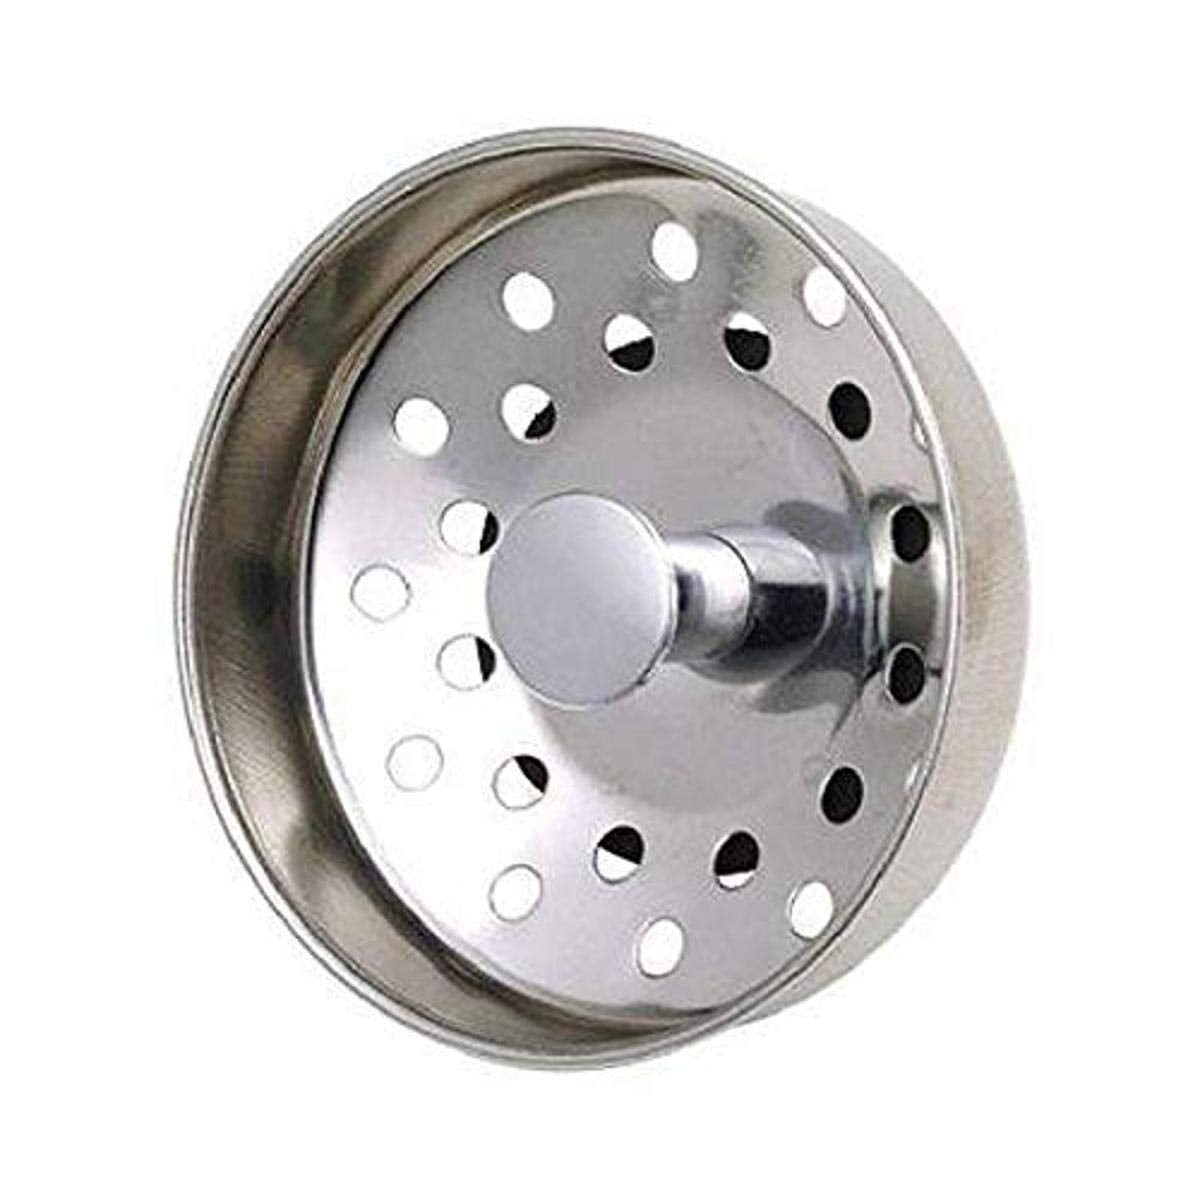 Portable Round Sink Strainer Stainless Filter Net Drain For Bathroom Kitchen MP 